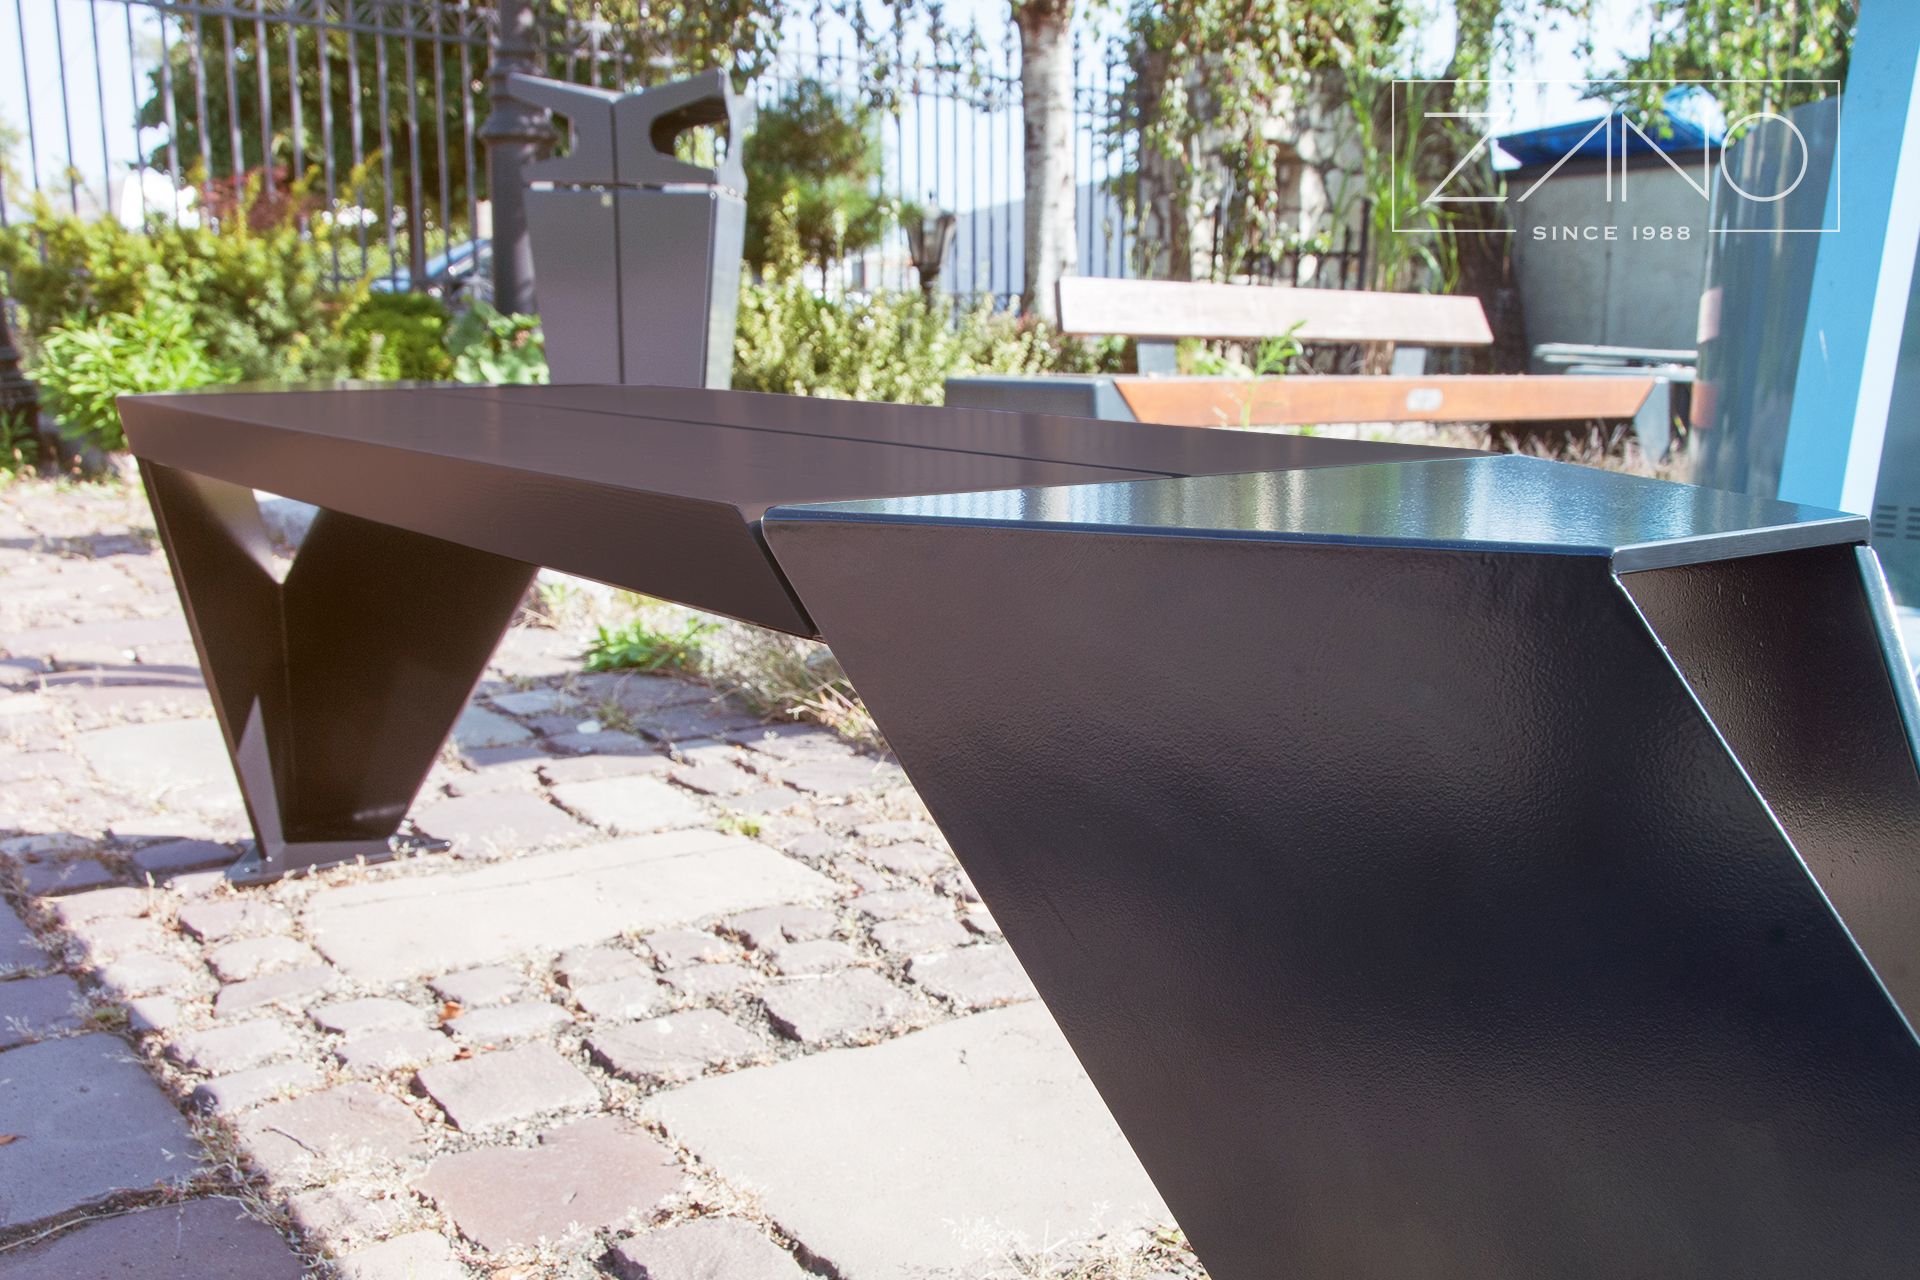 Modular, park bench made of steel and hardwood